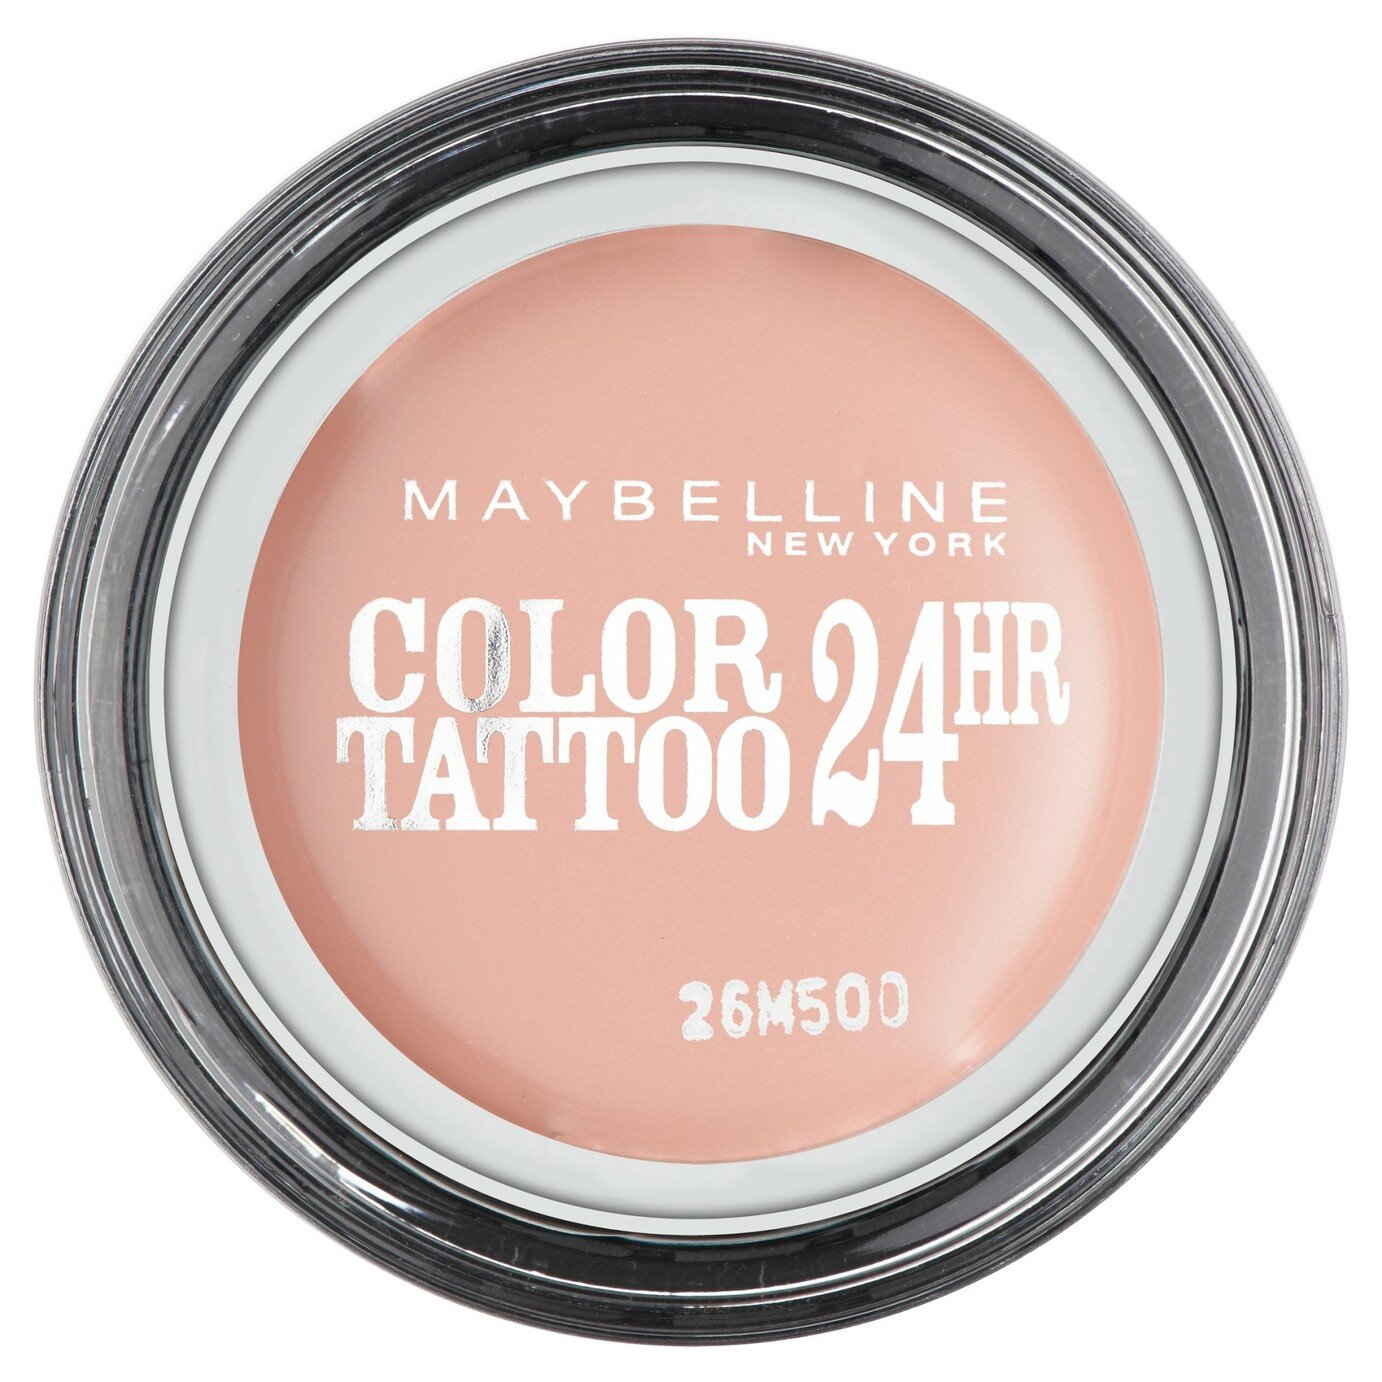 Maybelline Color Tattoo 24 hr Eyeshadow - 91 Creme De Rose